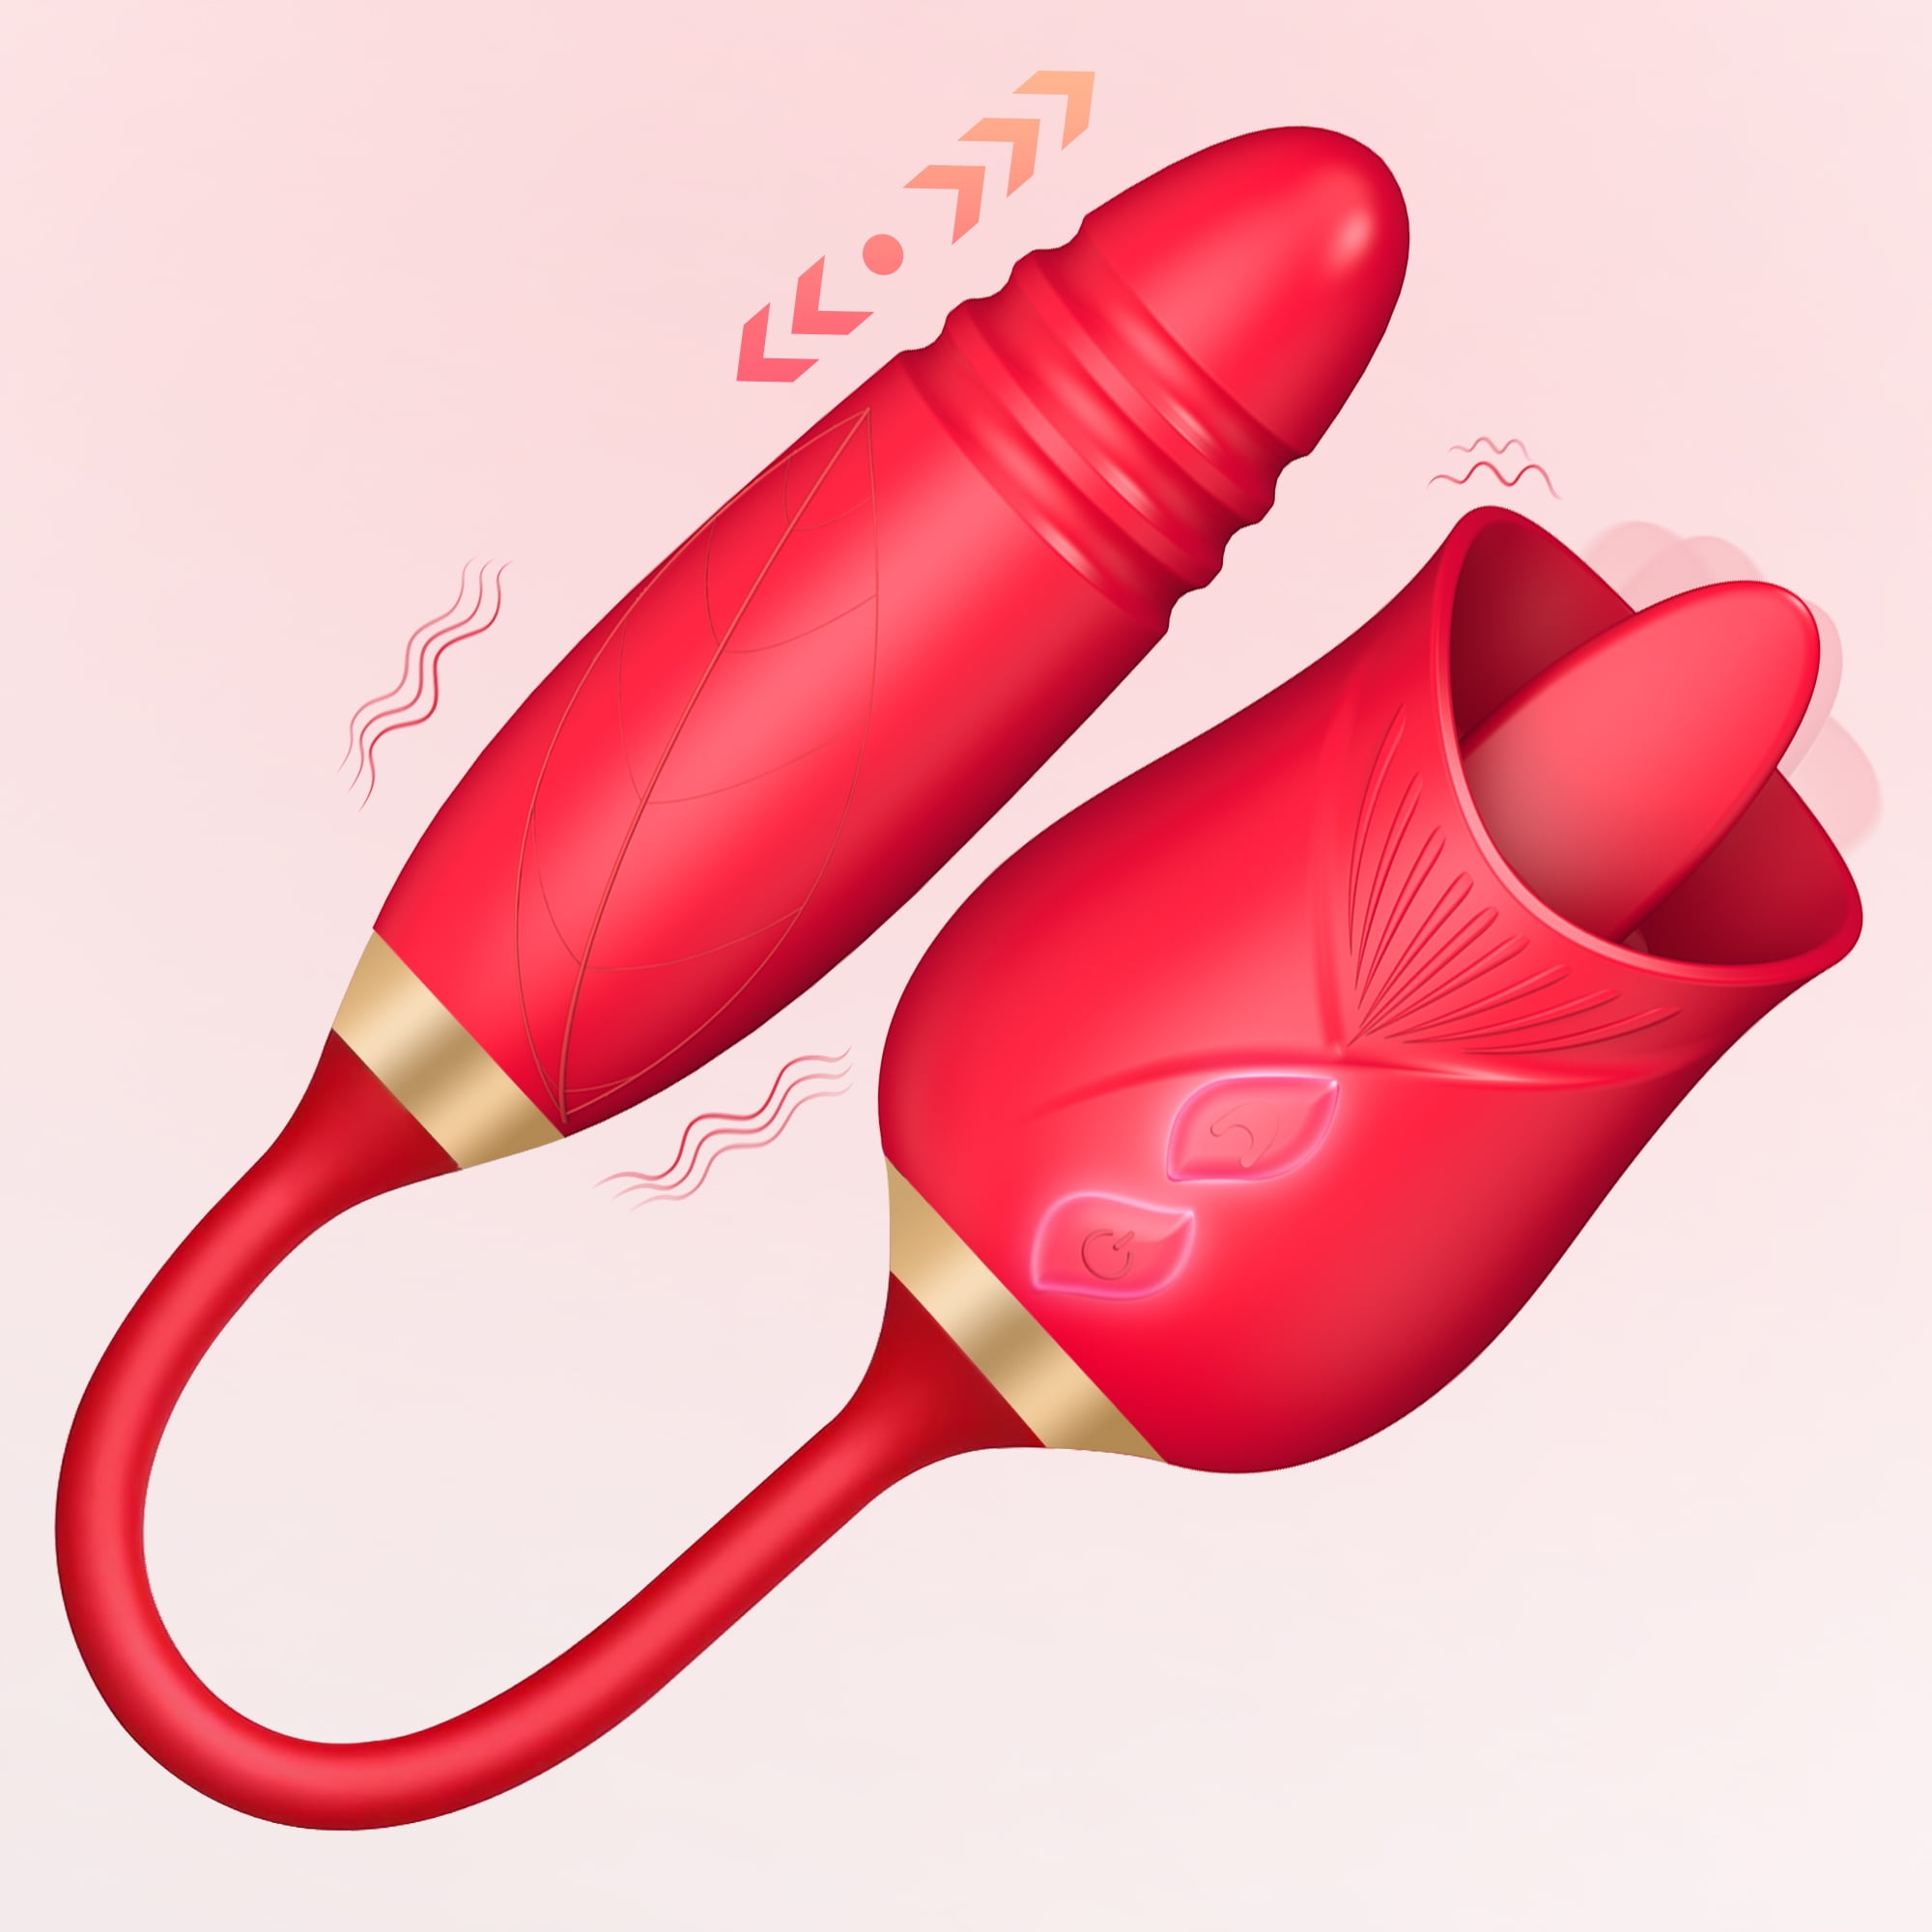 Rose Vibrator Sex Toy For Women